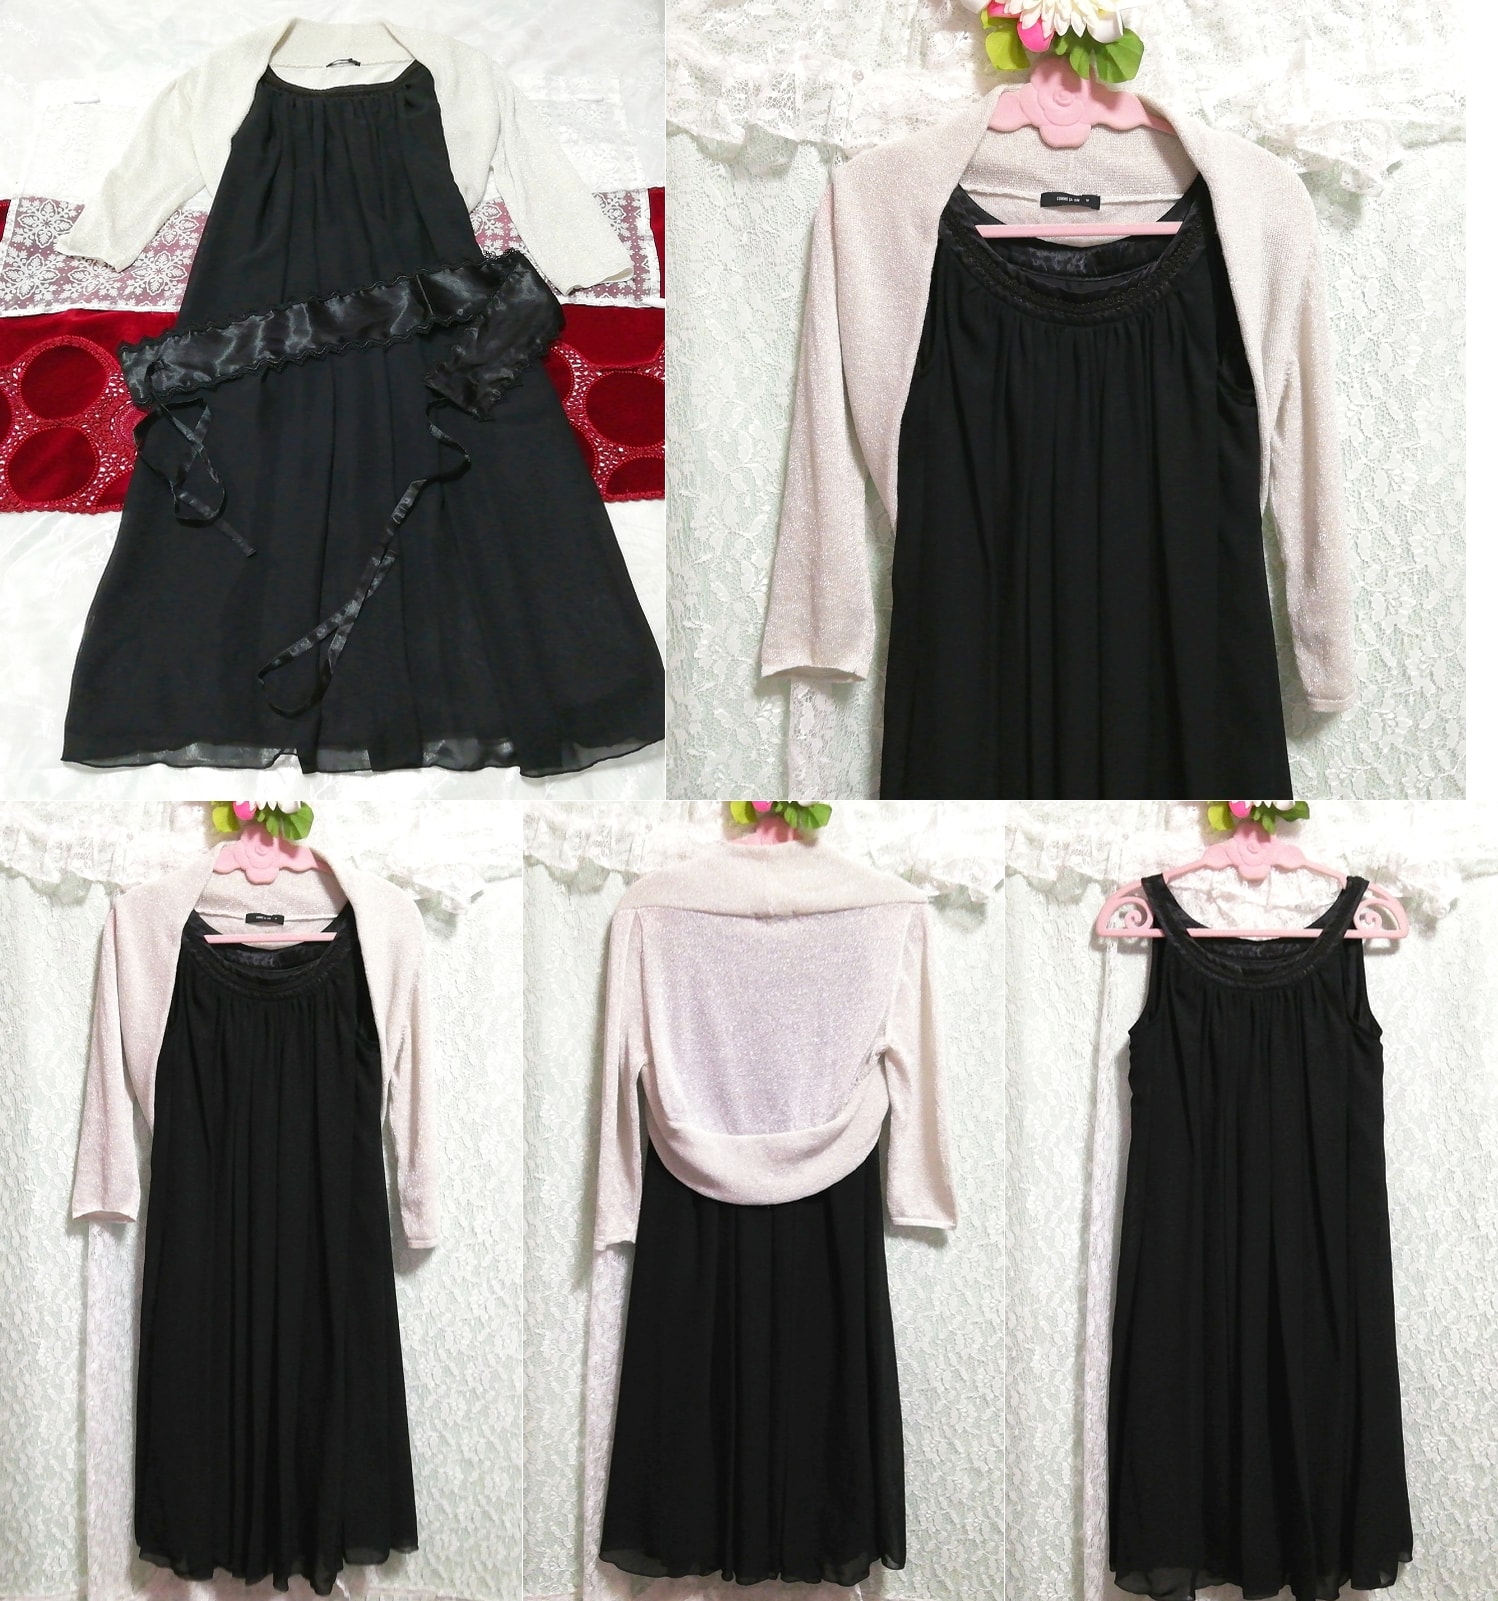 Gray haori gown negligee nightgown black chiffon camisole dress 2P, fashion, ladies' fashion, nightwear, pajamas